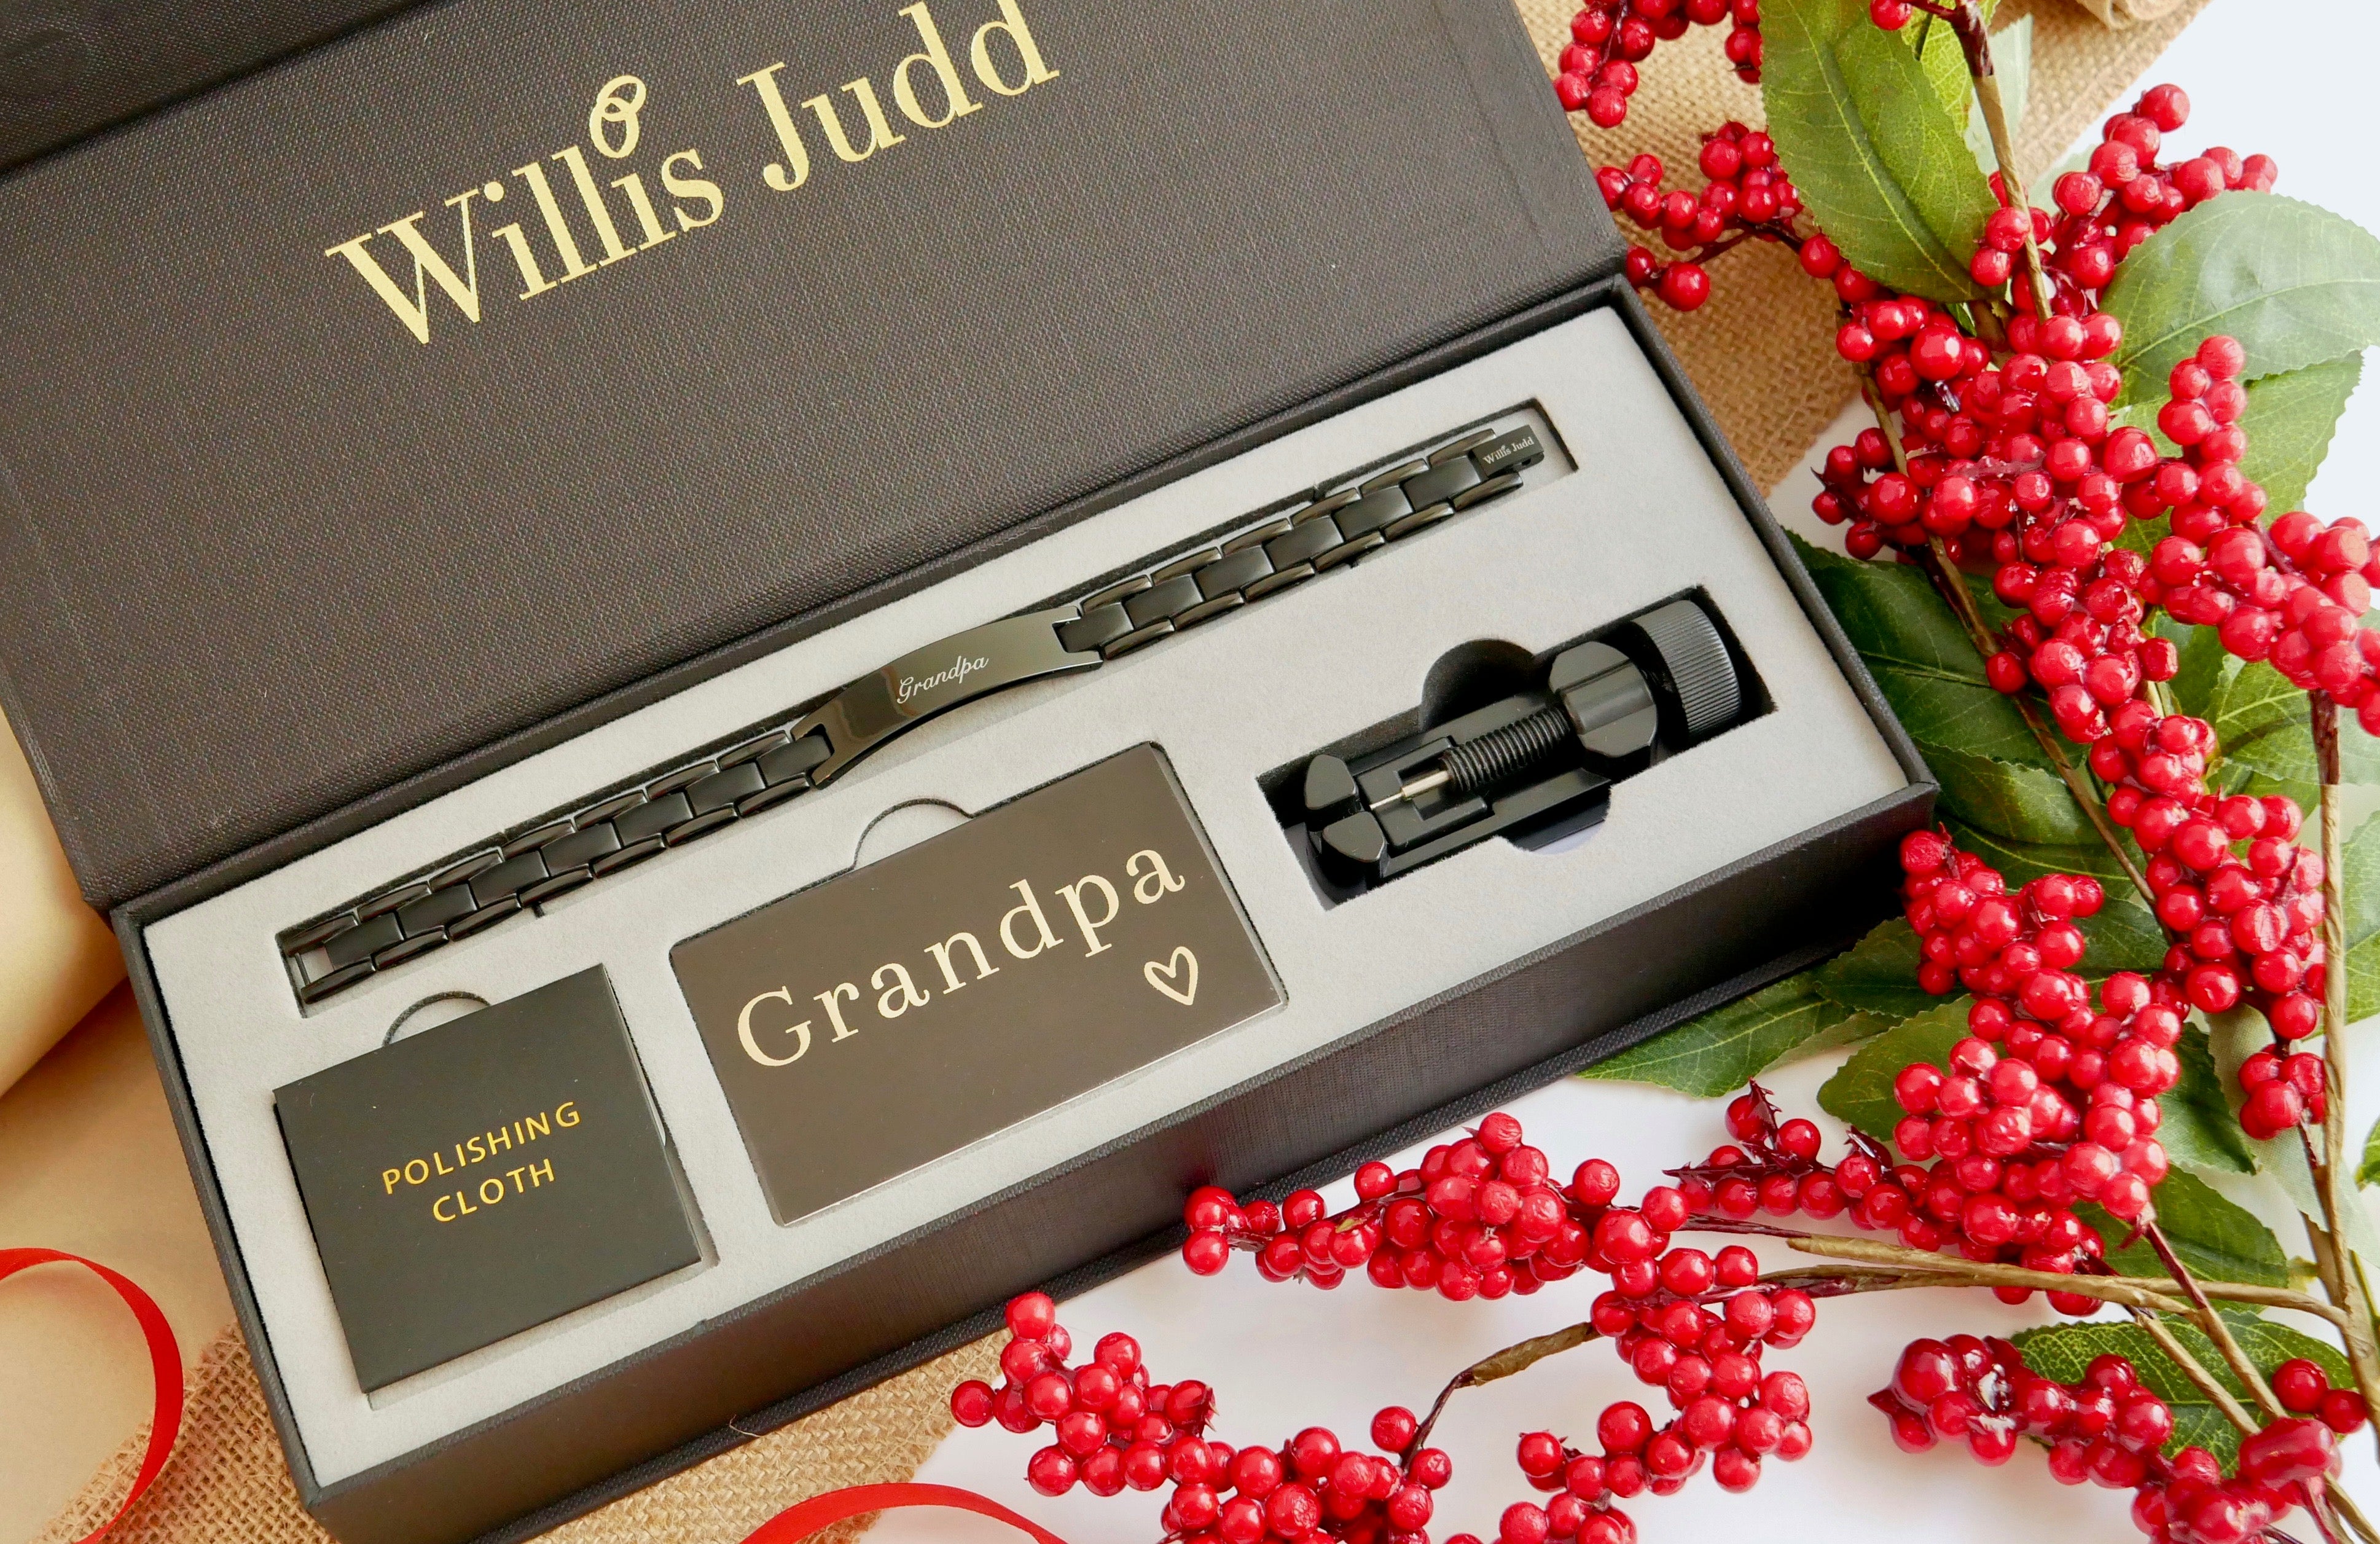 Grandpa Bracelet Etched Love You Grandpa by Willis Judd